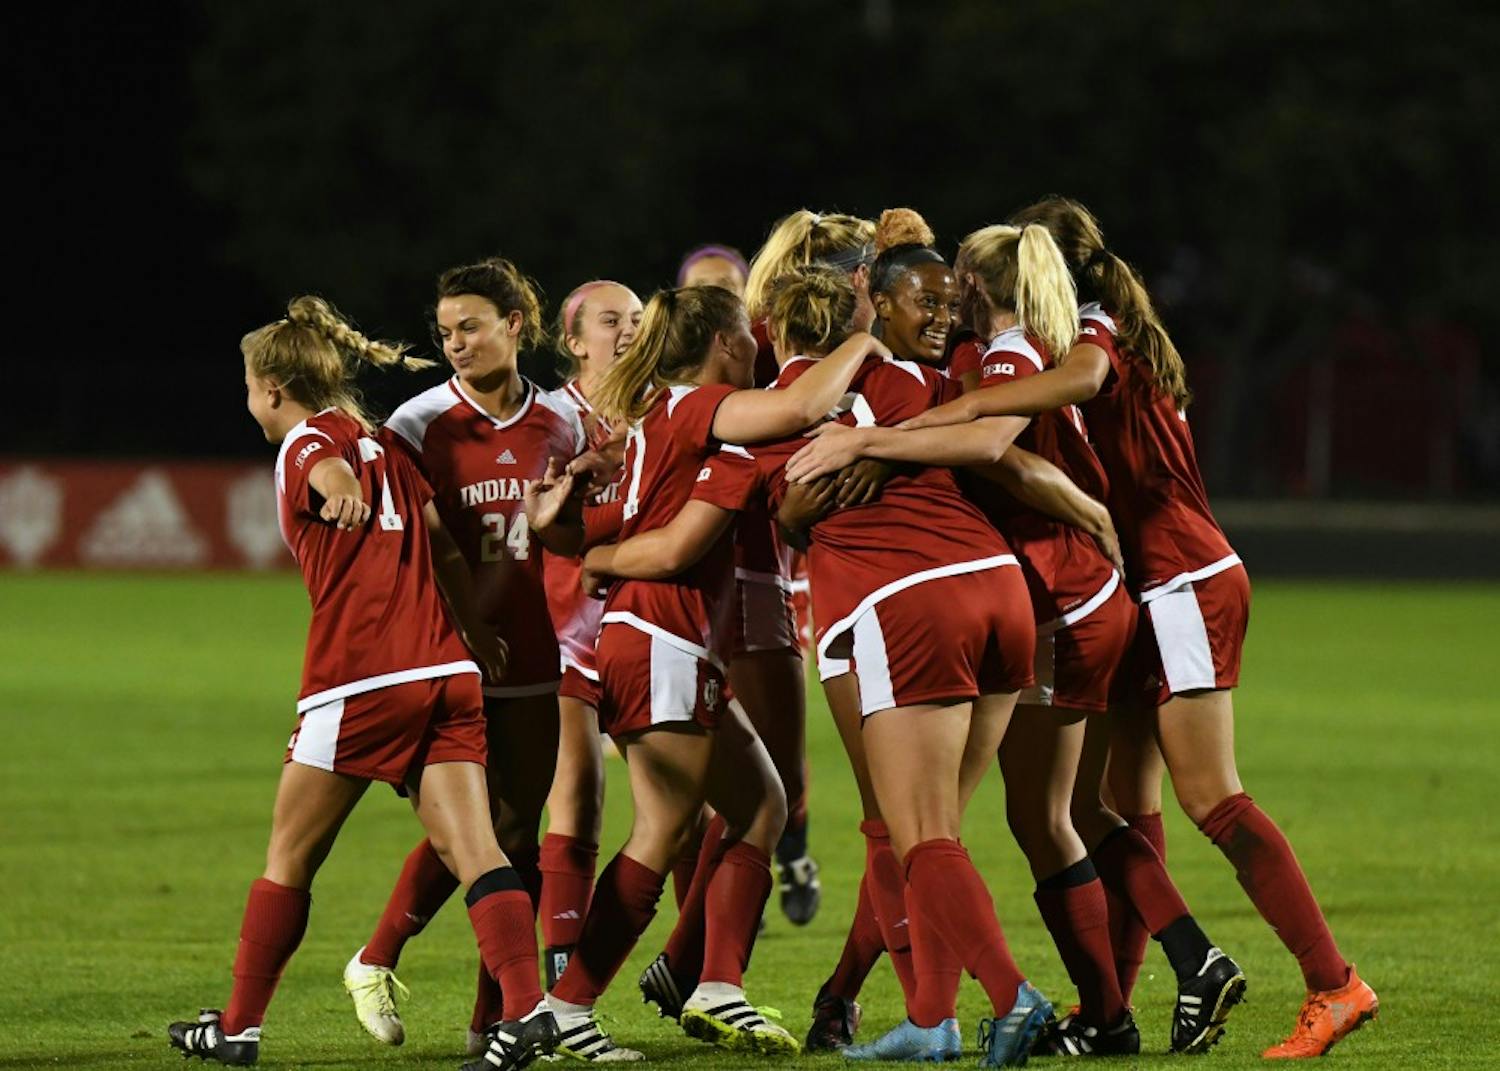 GALLERY: IU women's soccer wins 2-1 over Iowa